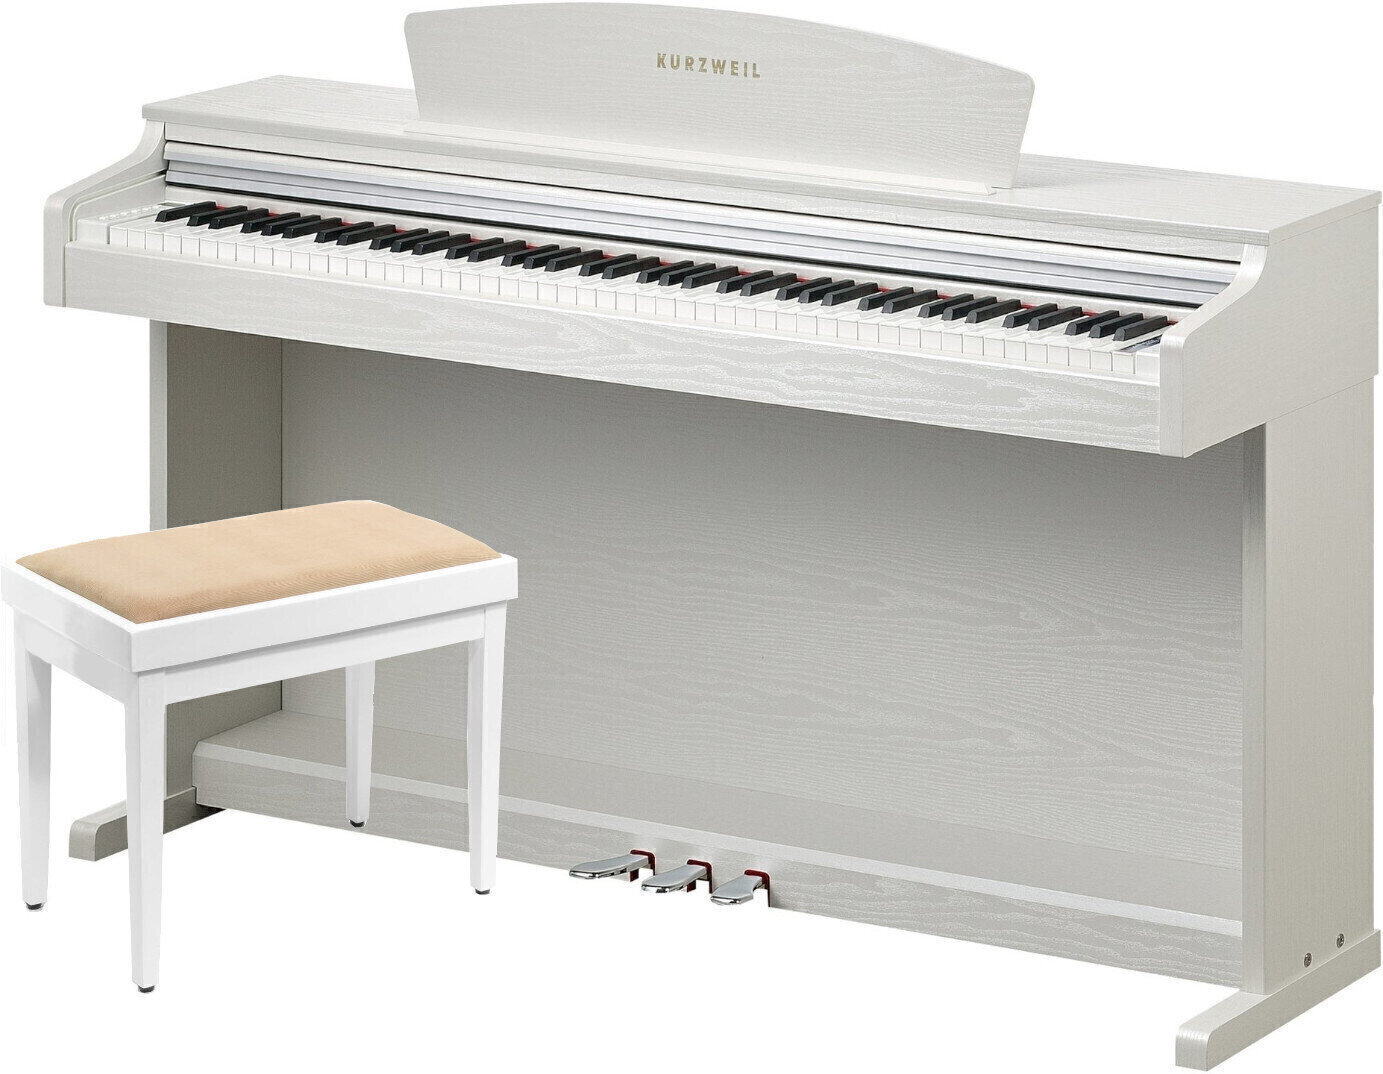 Digital Piano Kurzweil M110A Weiß Digital Piano